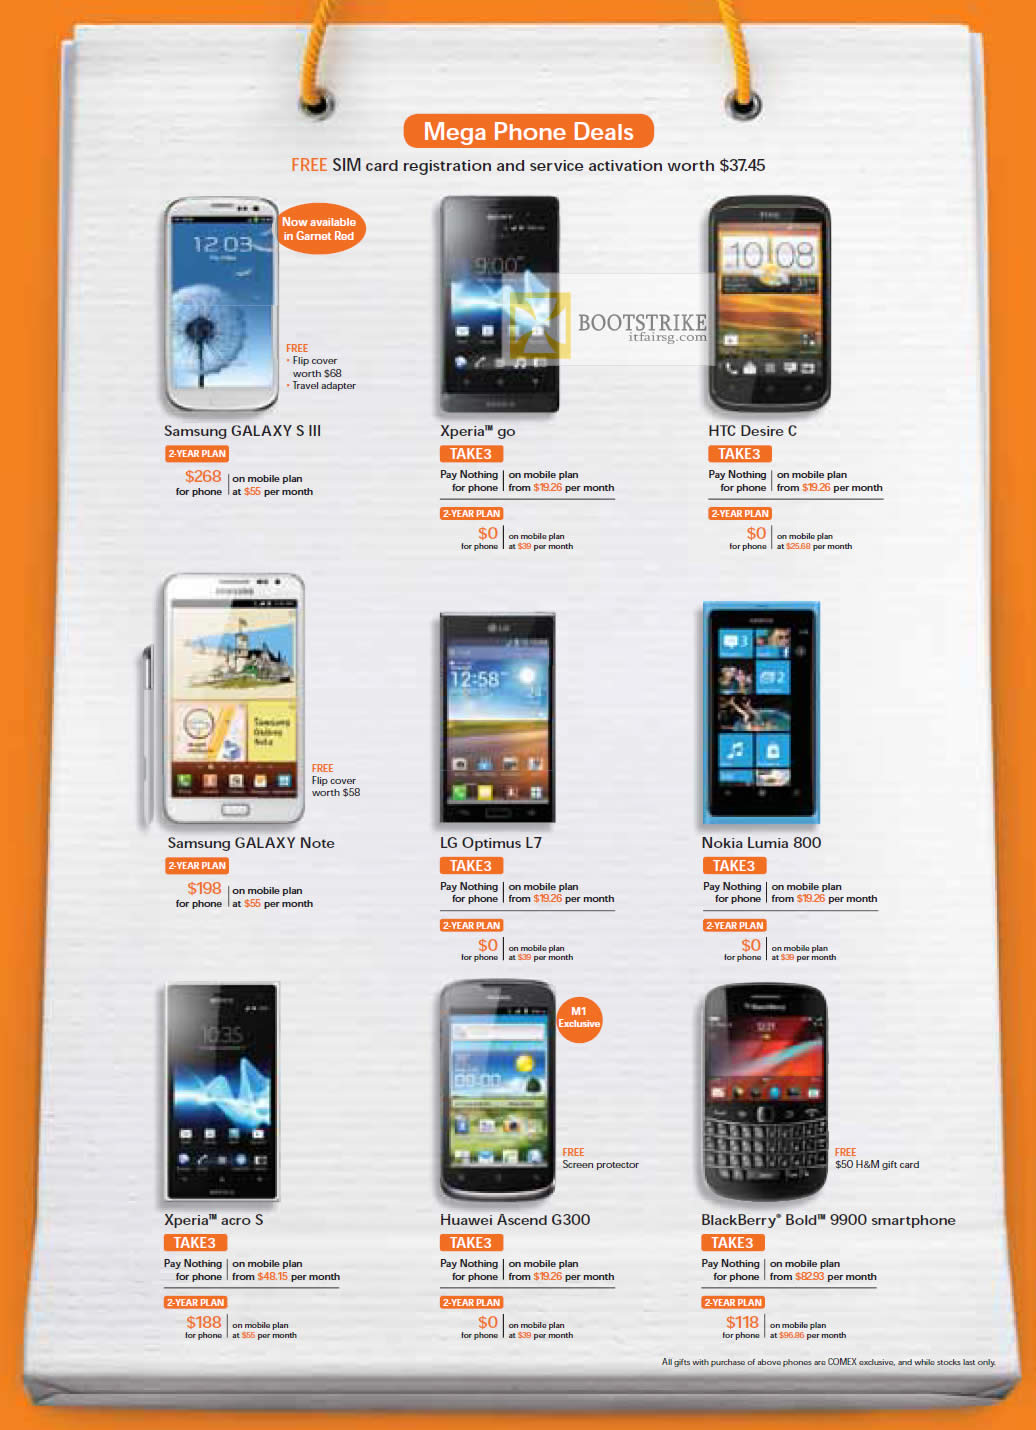 COMEX 2012 price list image brochure of M1 Samsung Galaxy S III, Note, Sony Xperia Go, Arco S, HTC Desire C, LG Optimus L7, Nokia Lumia 800, Huawei Ascend G300, Blackberry Bold 9900